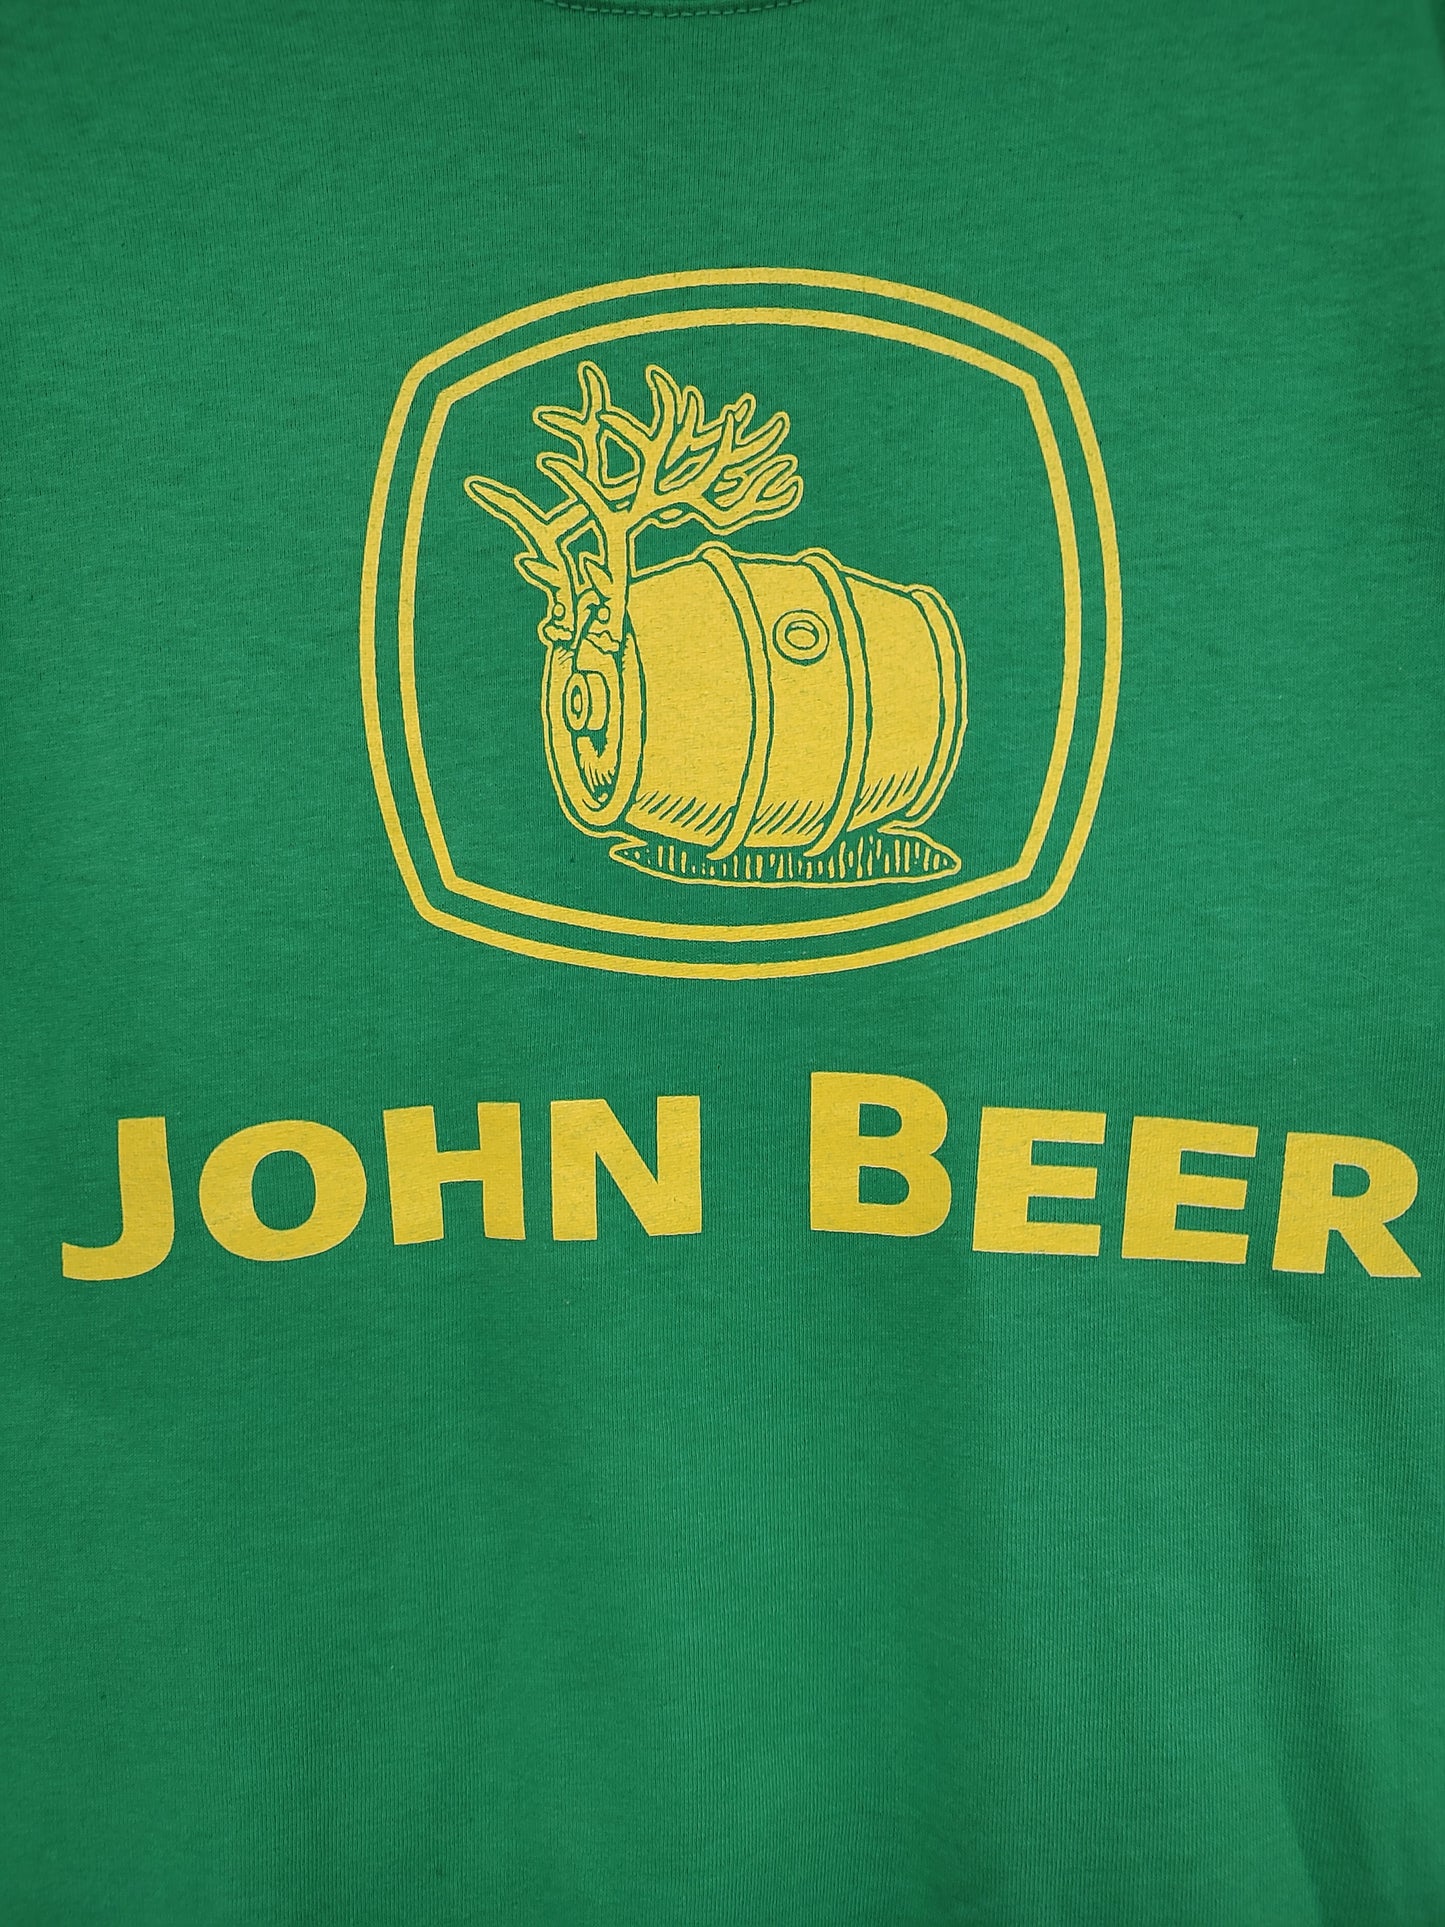 John Beer Green Shirt